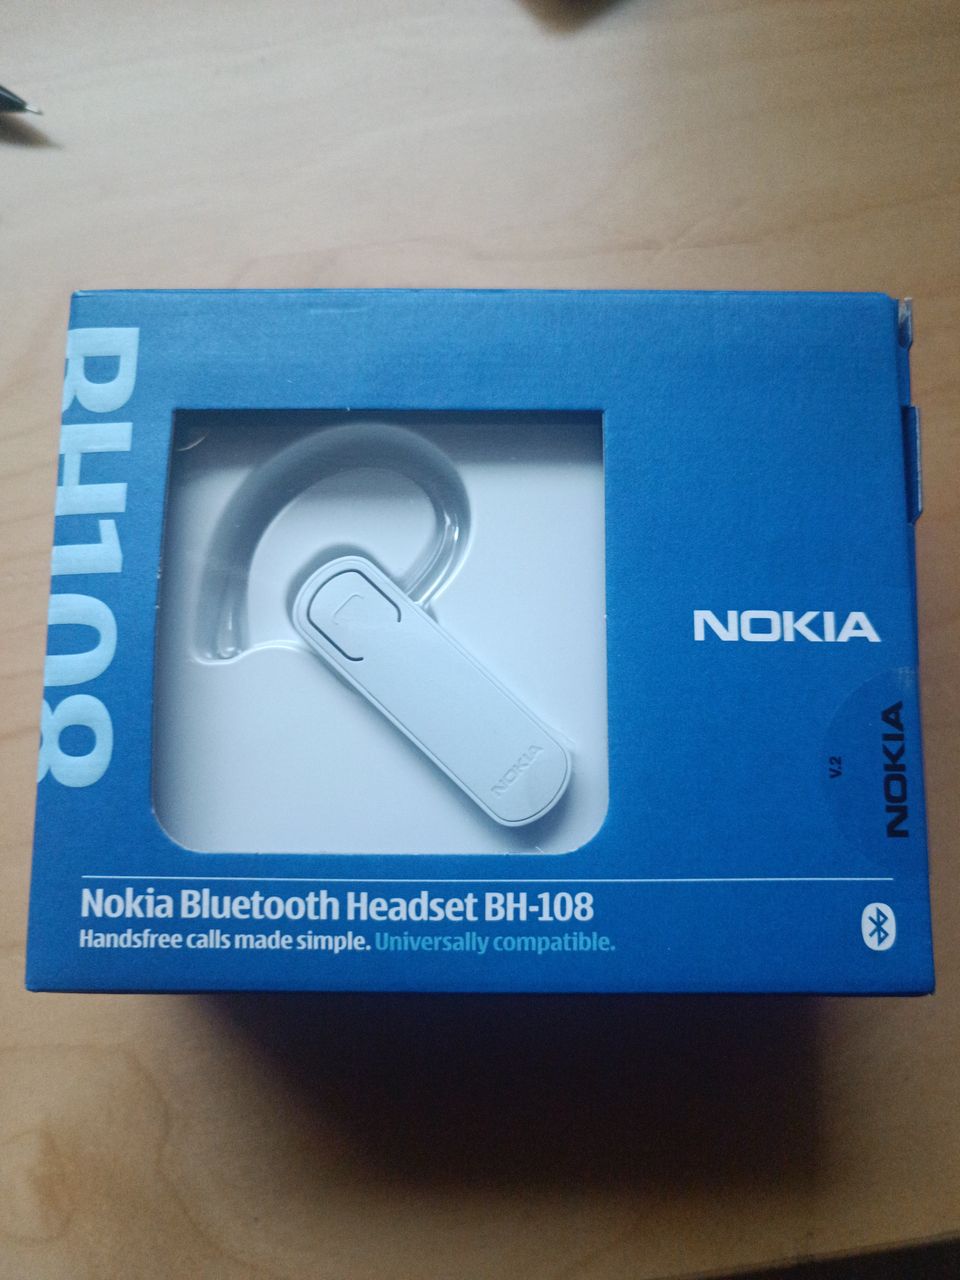 Nokia Bluetooth Headset - BH-108